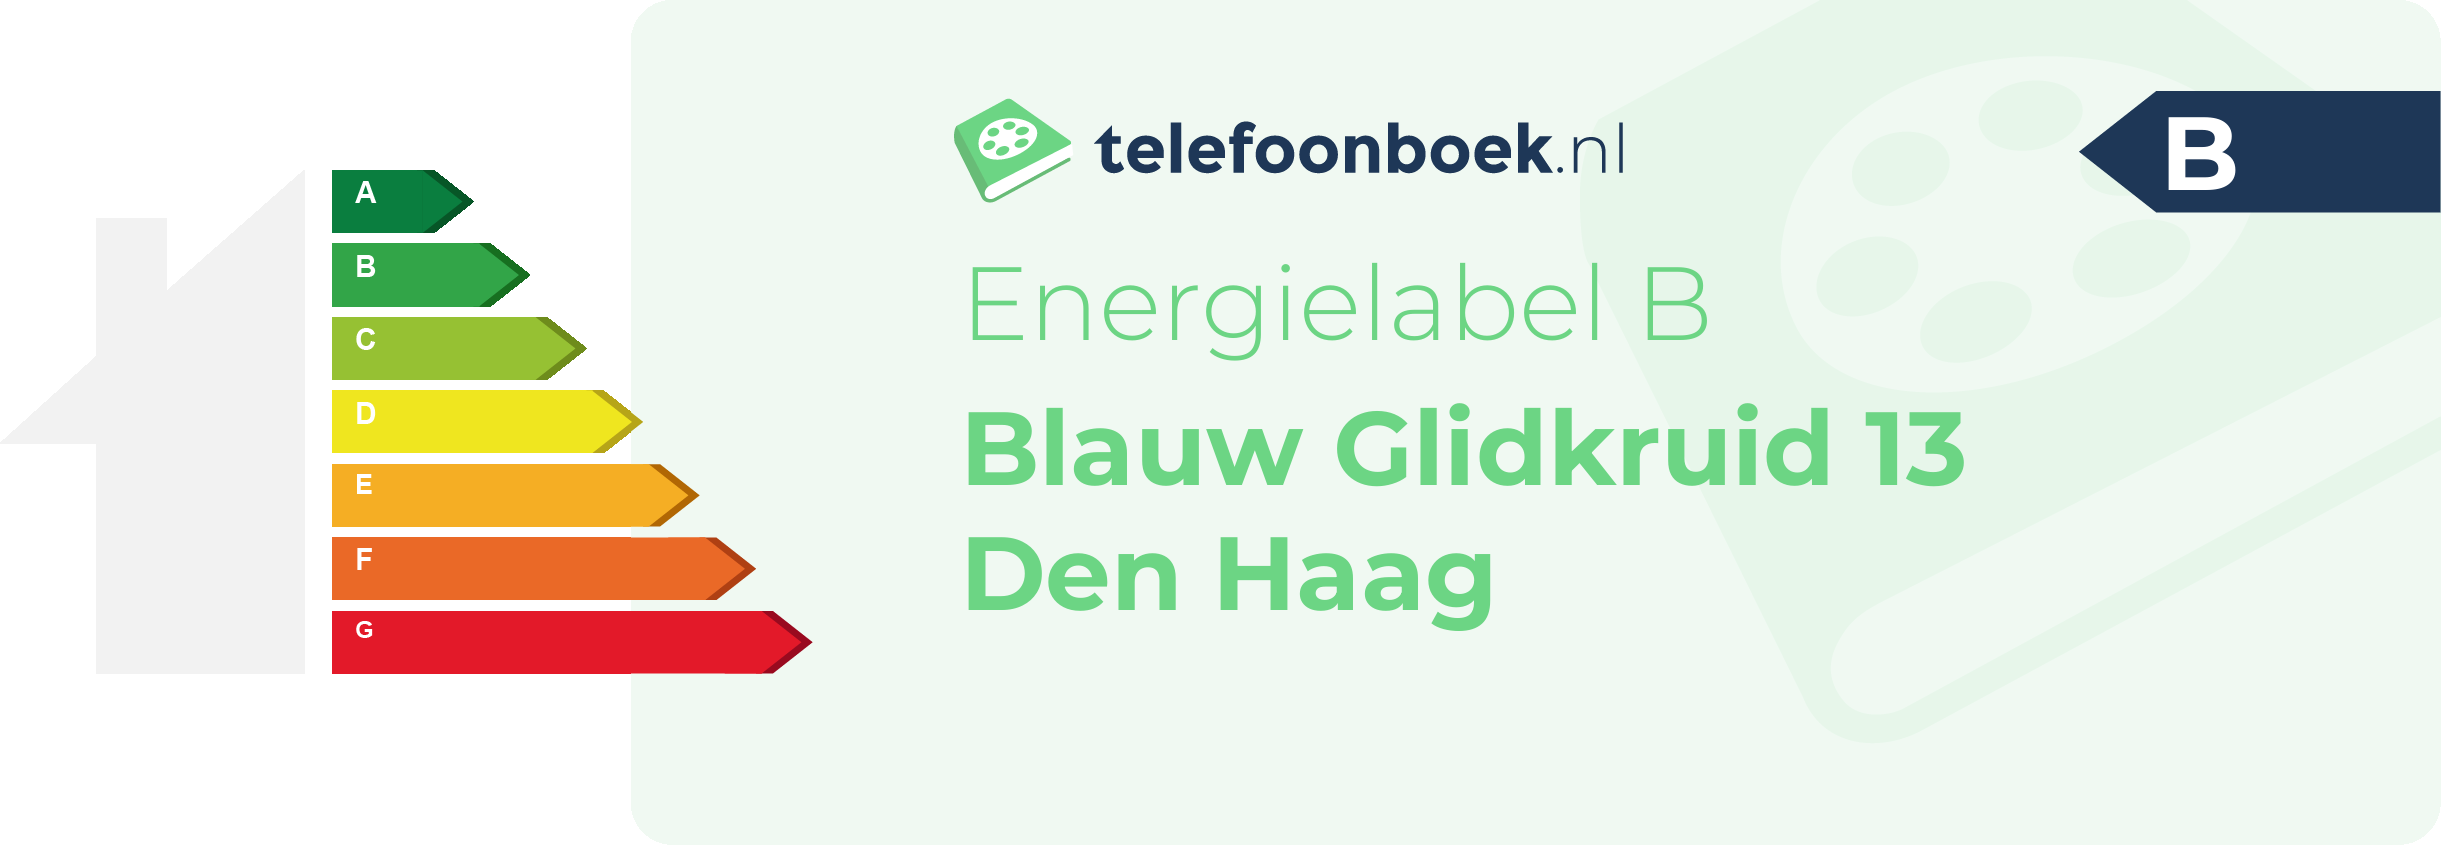 Energielabel Blauw Glidkruid 13 Den Haag